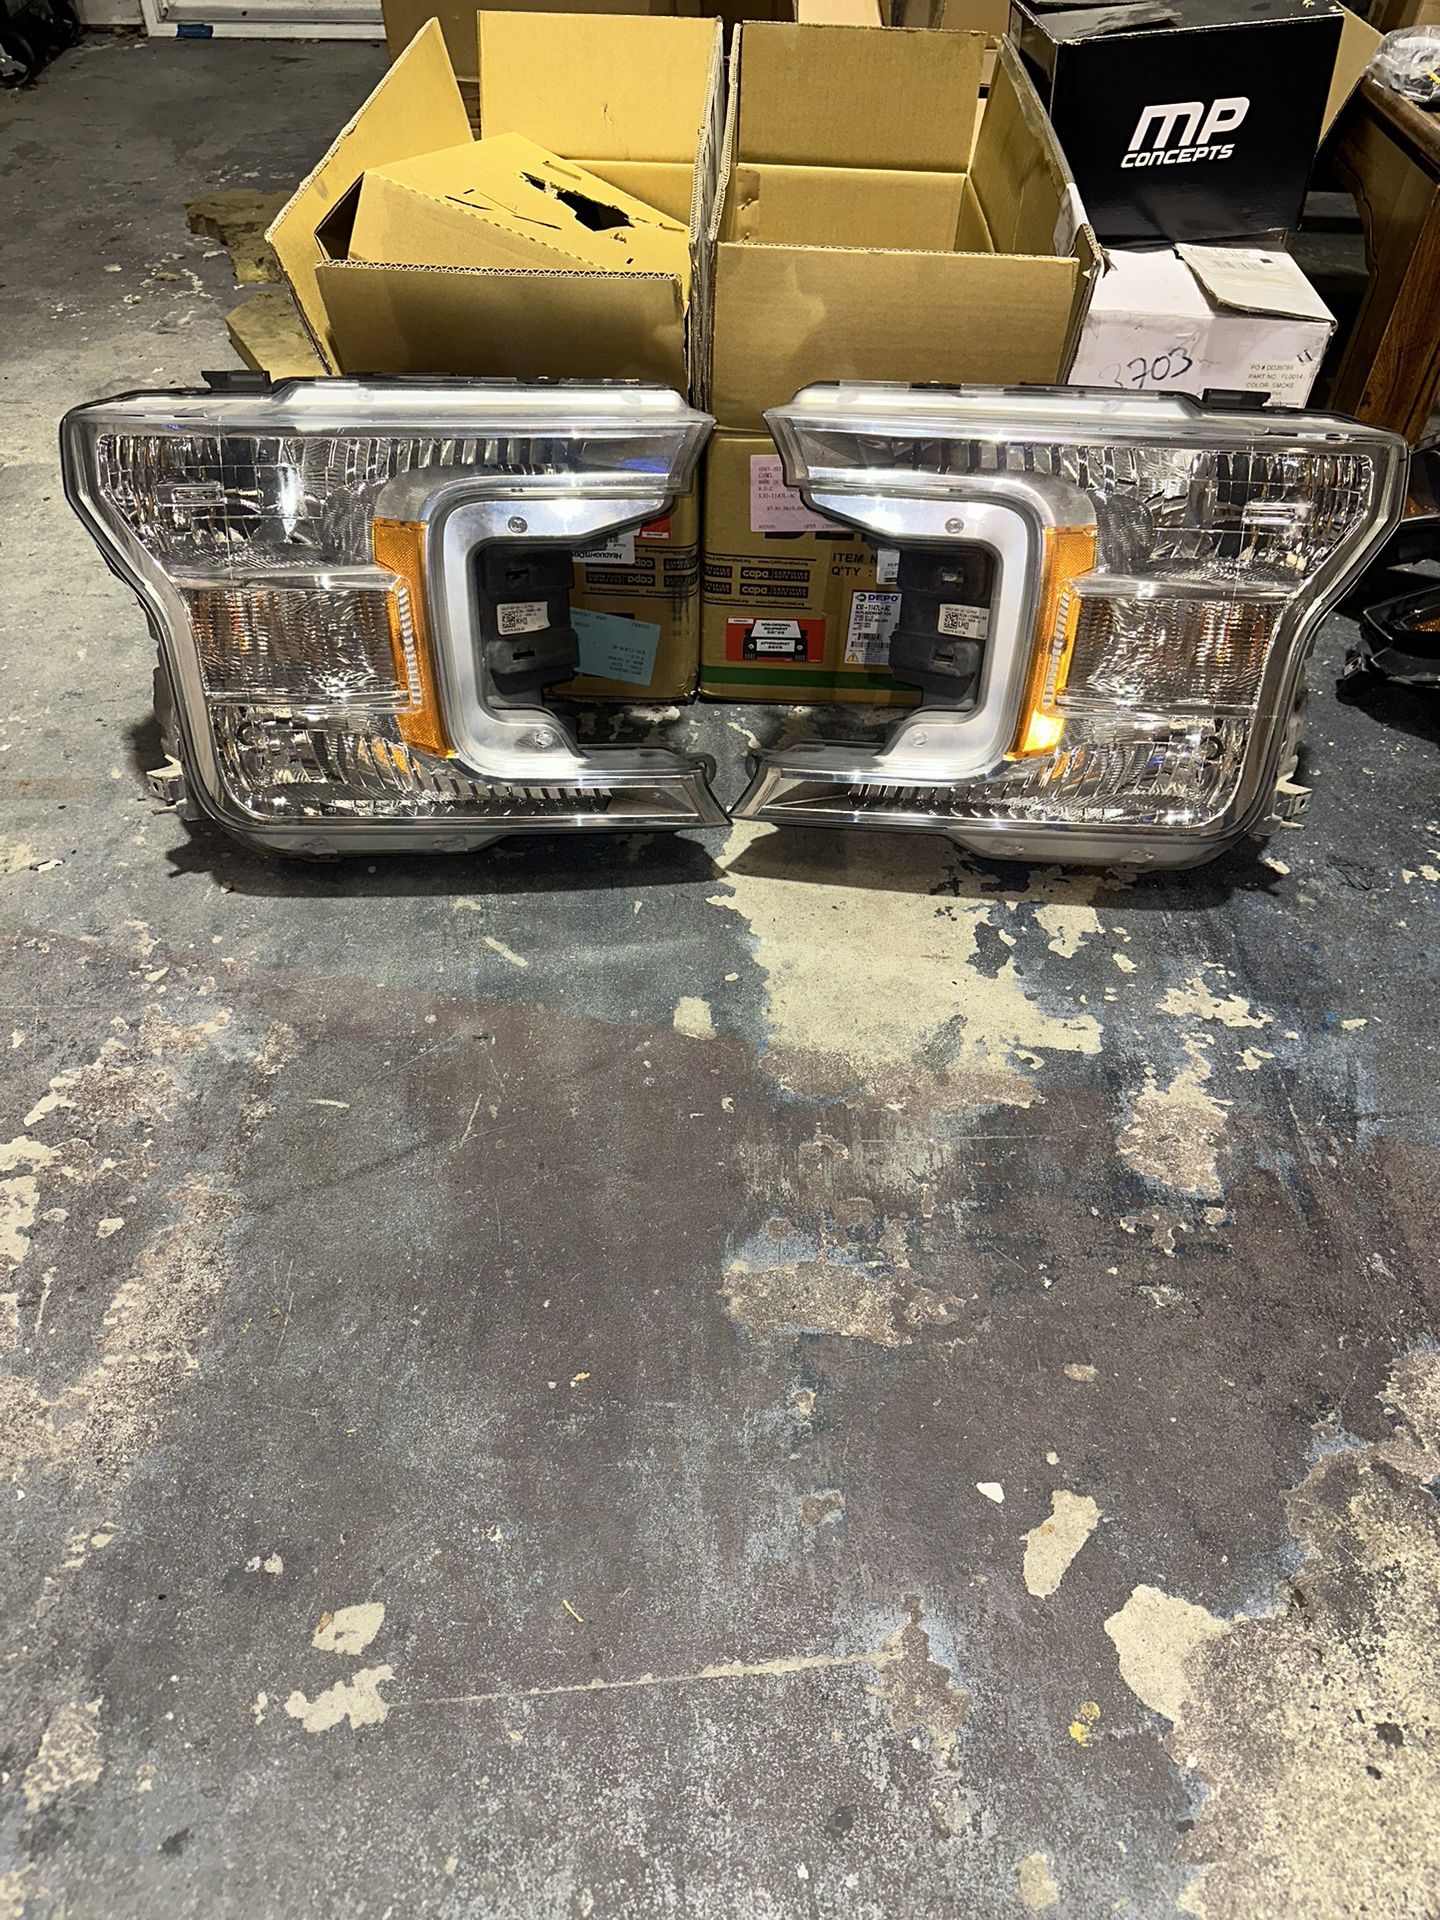 18 2019 2020 Ford F150 OEM Factory Headlights. Super Cheap 